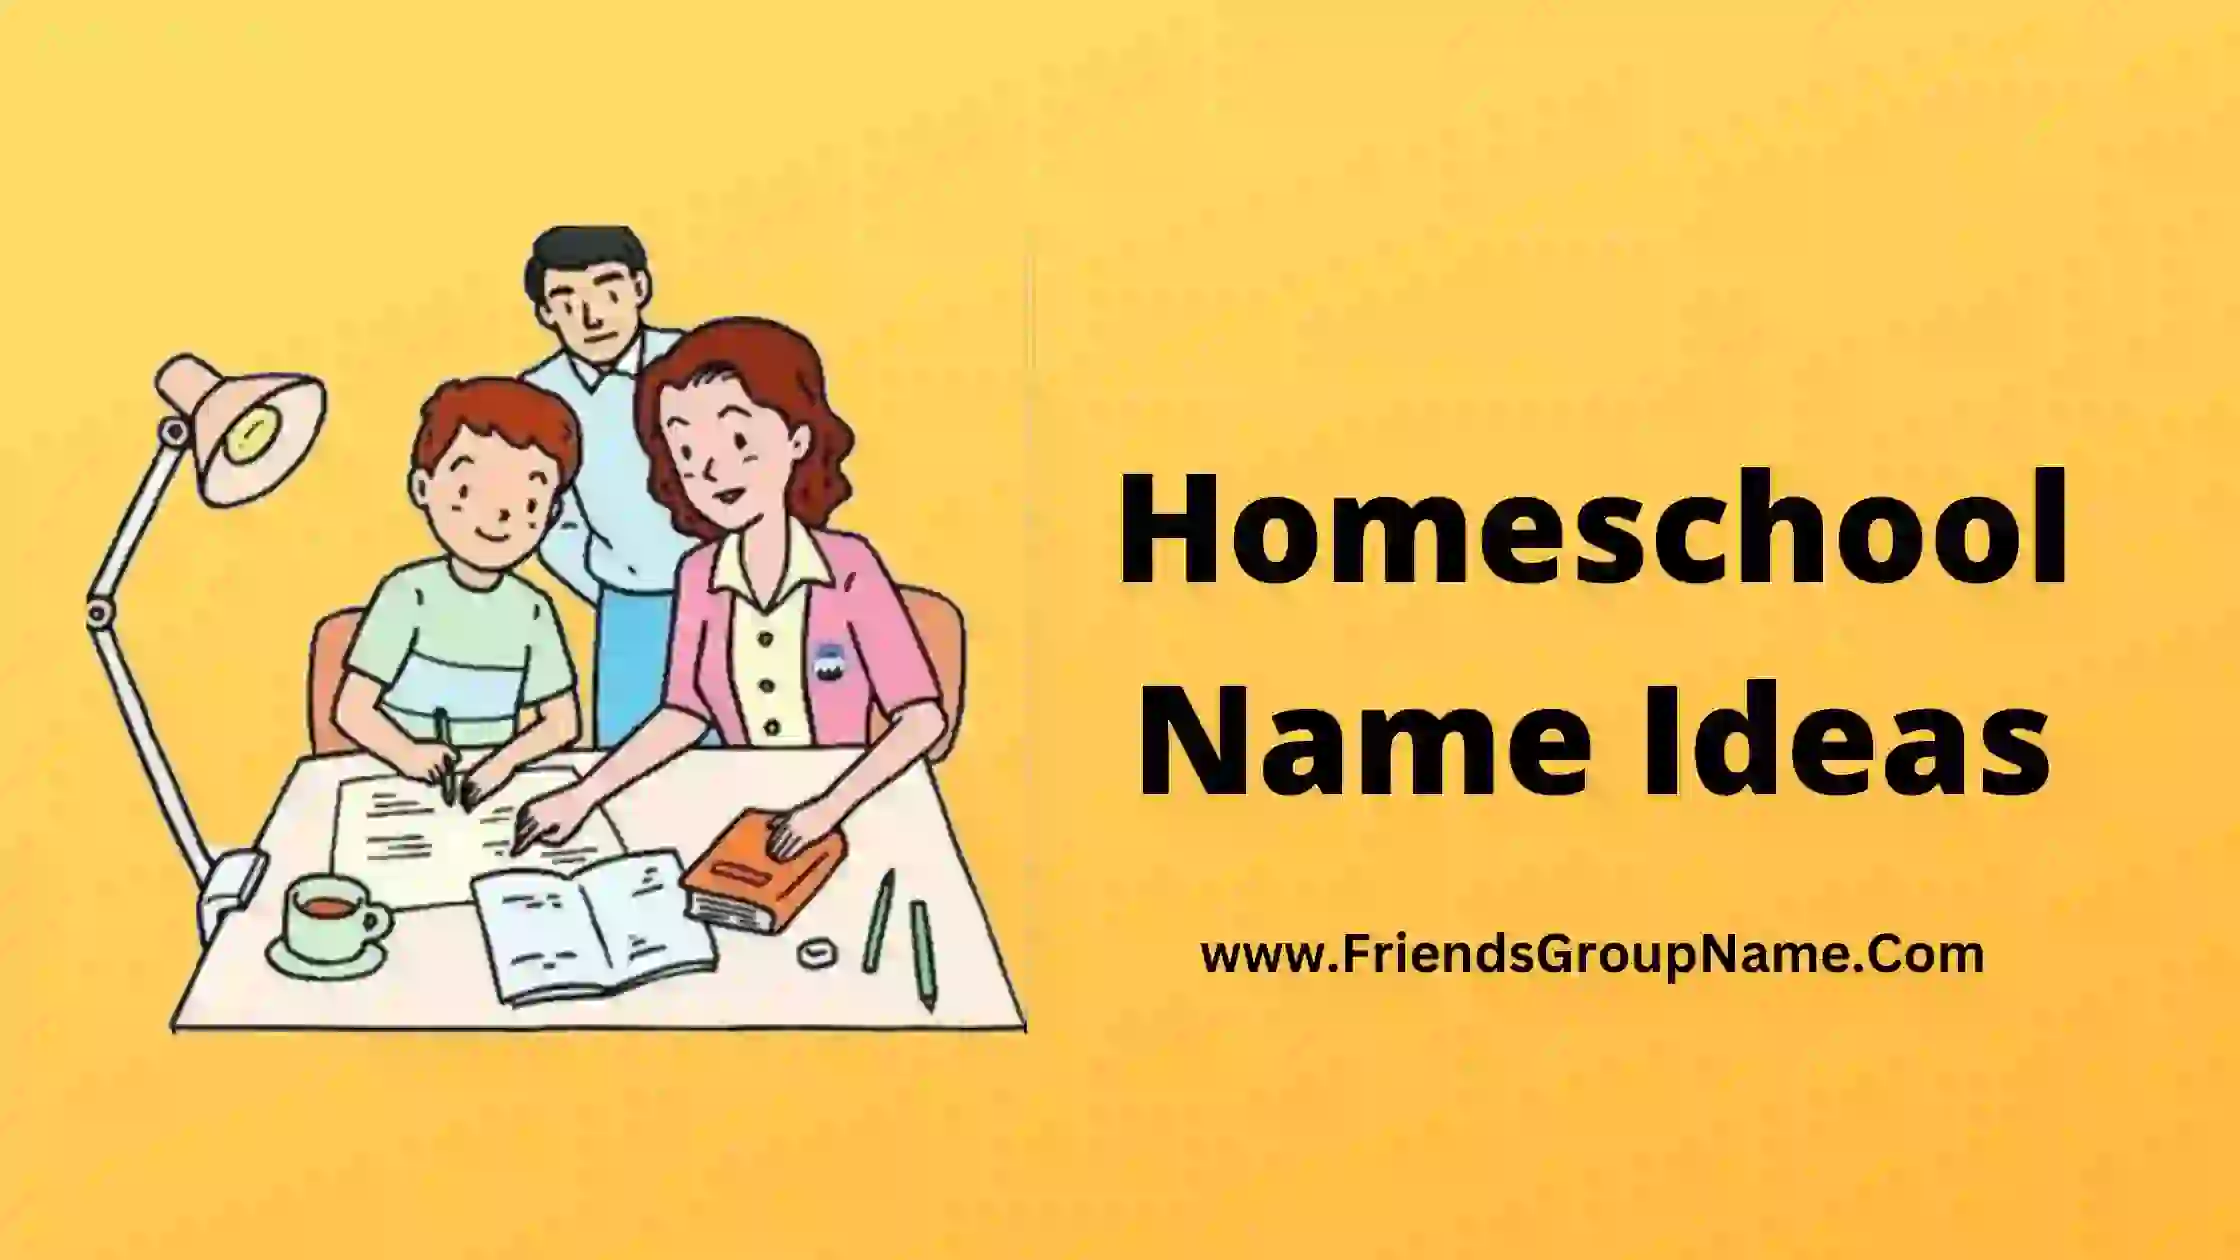 Homeschool Name Ideas